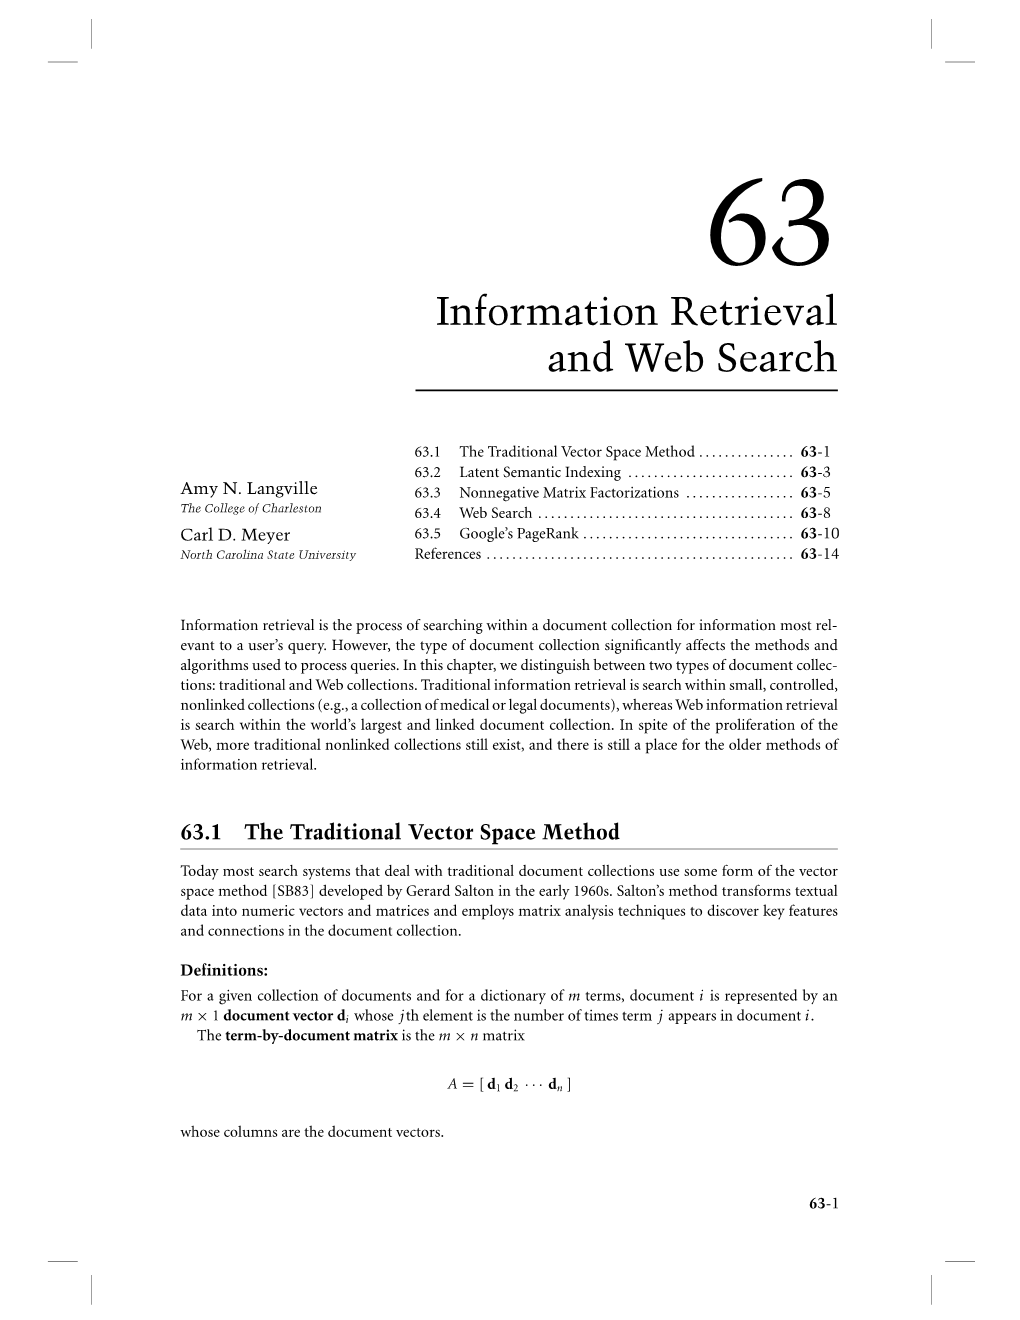 Information Retrieval and Web Search, (Pdf)